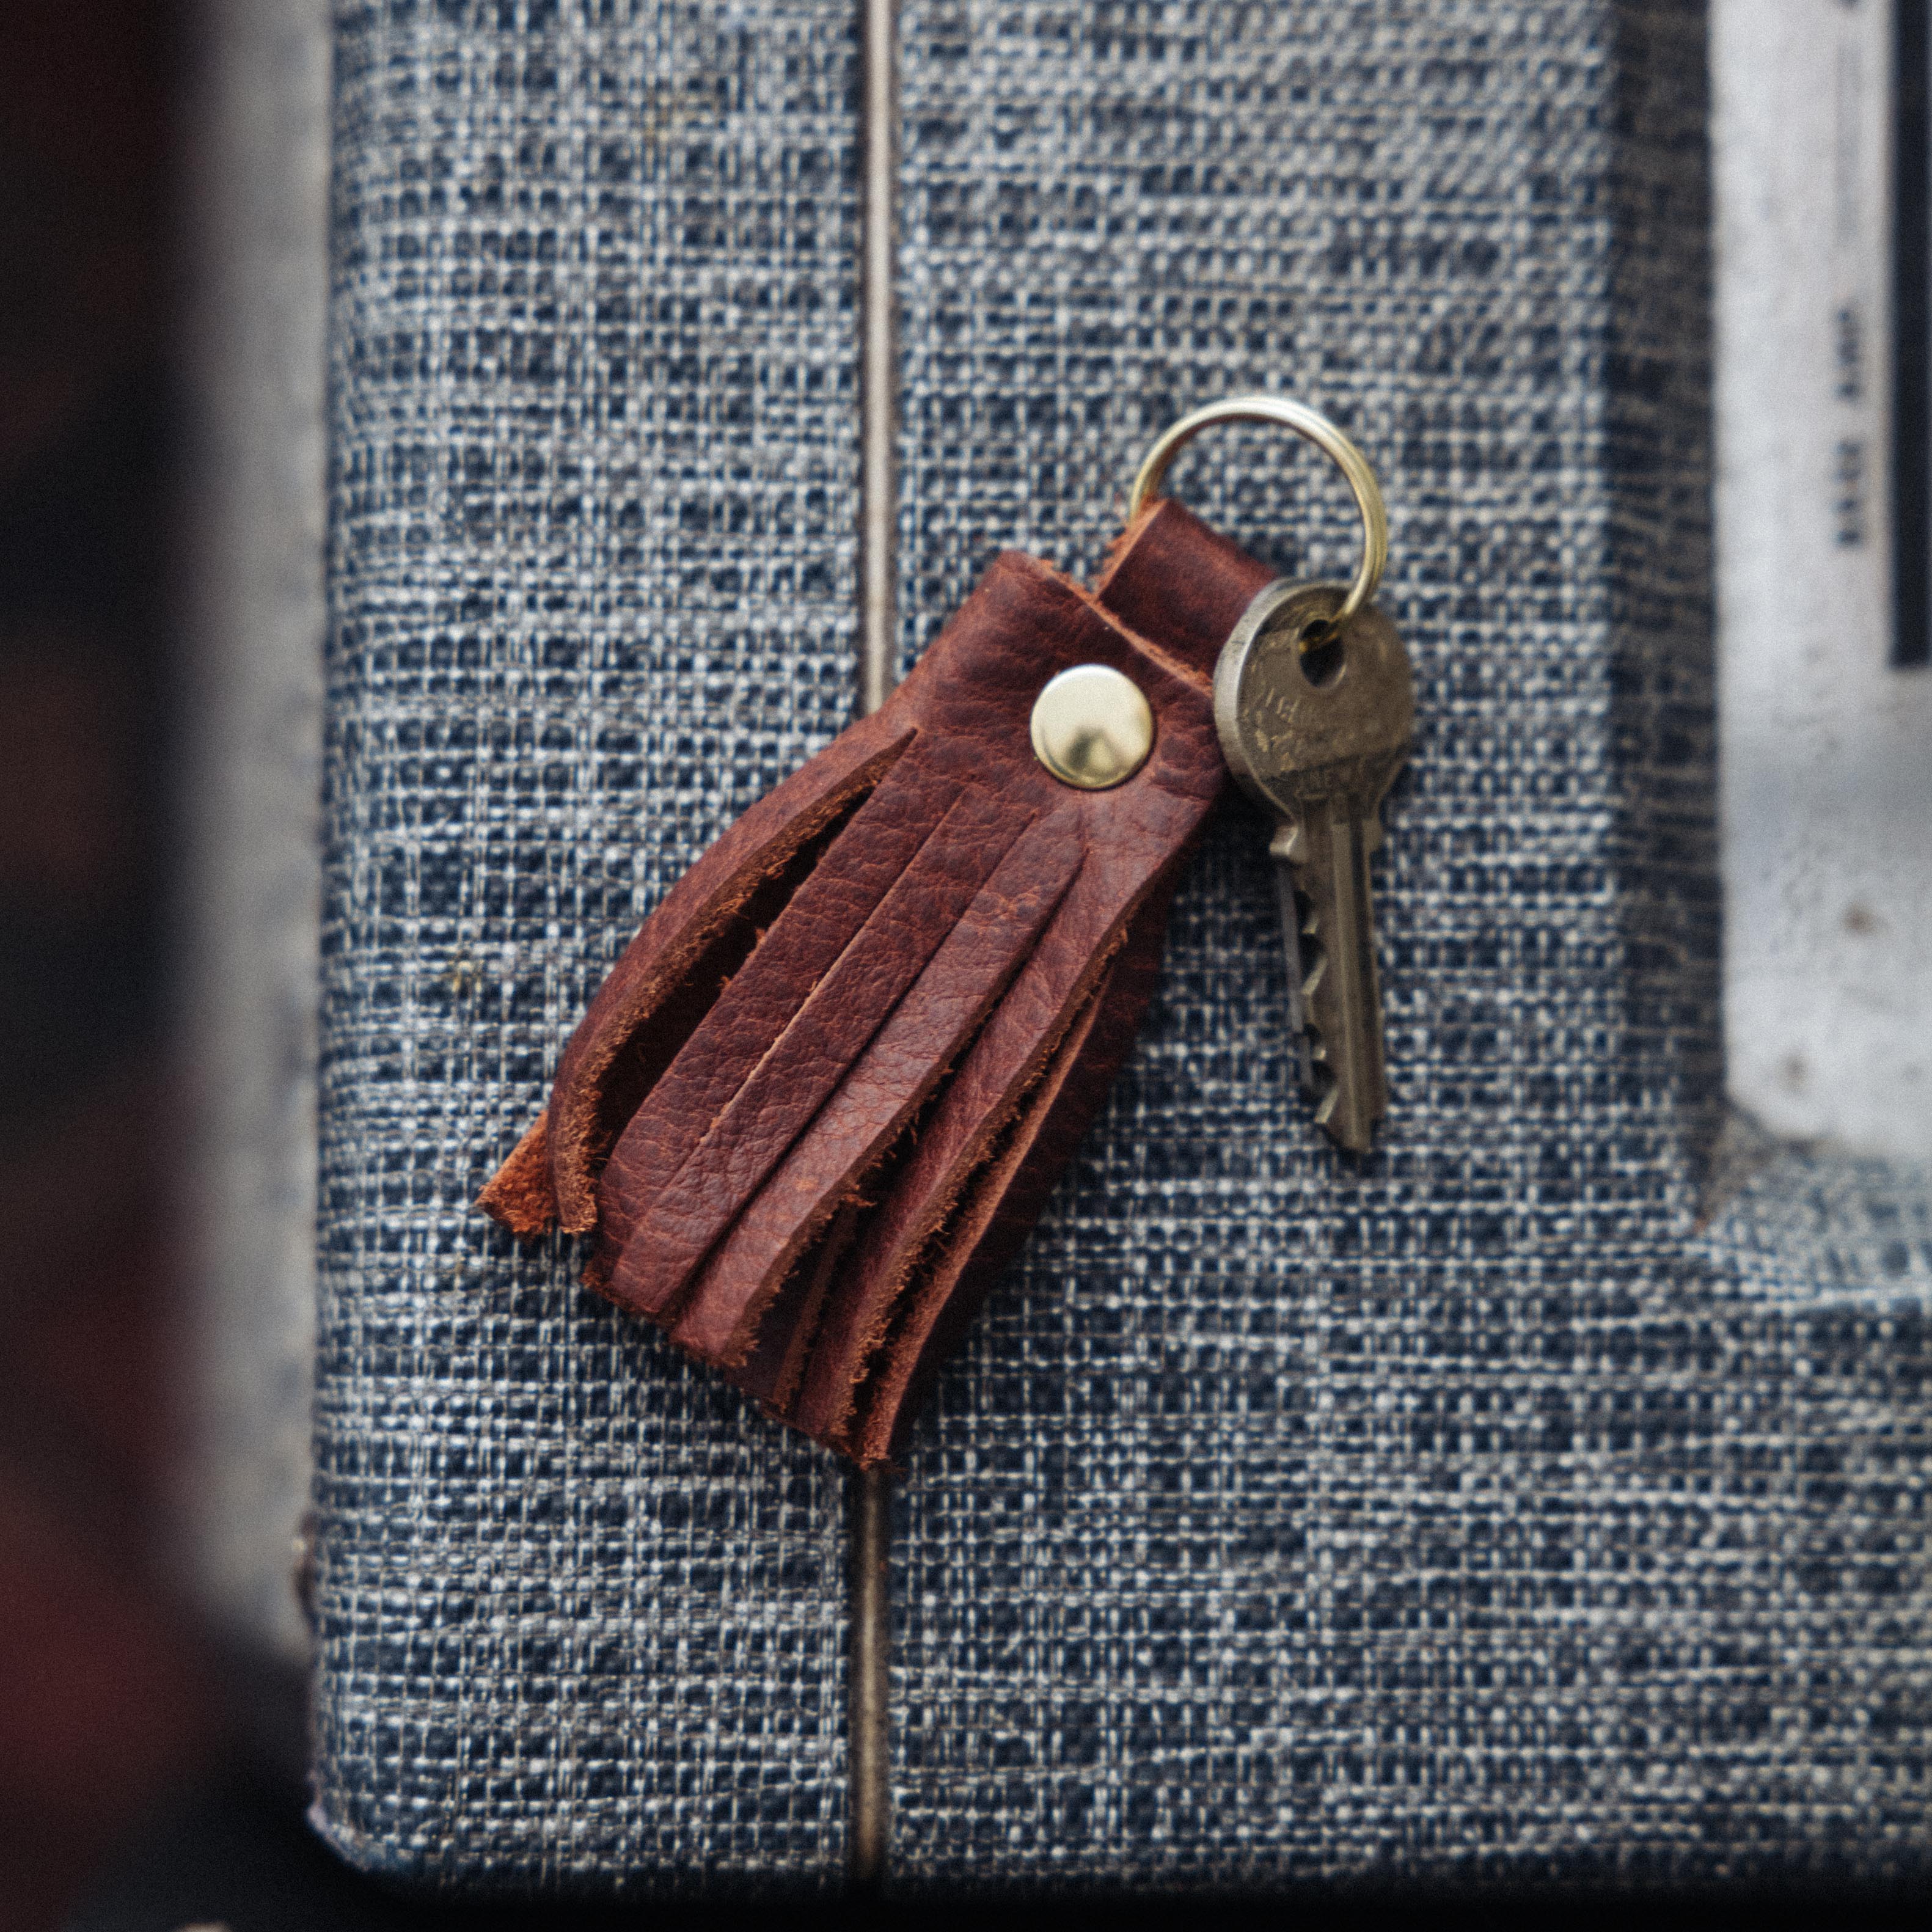 Olive Cypress Tassel Keychain- leather tassel keychain - KMM &amp; Co.